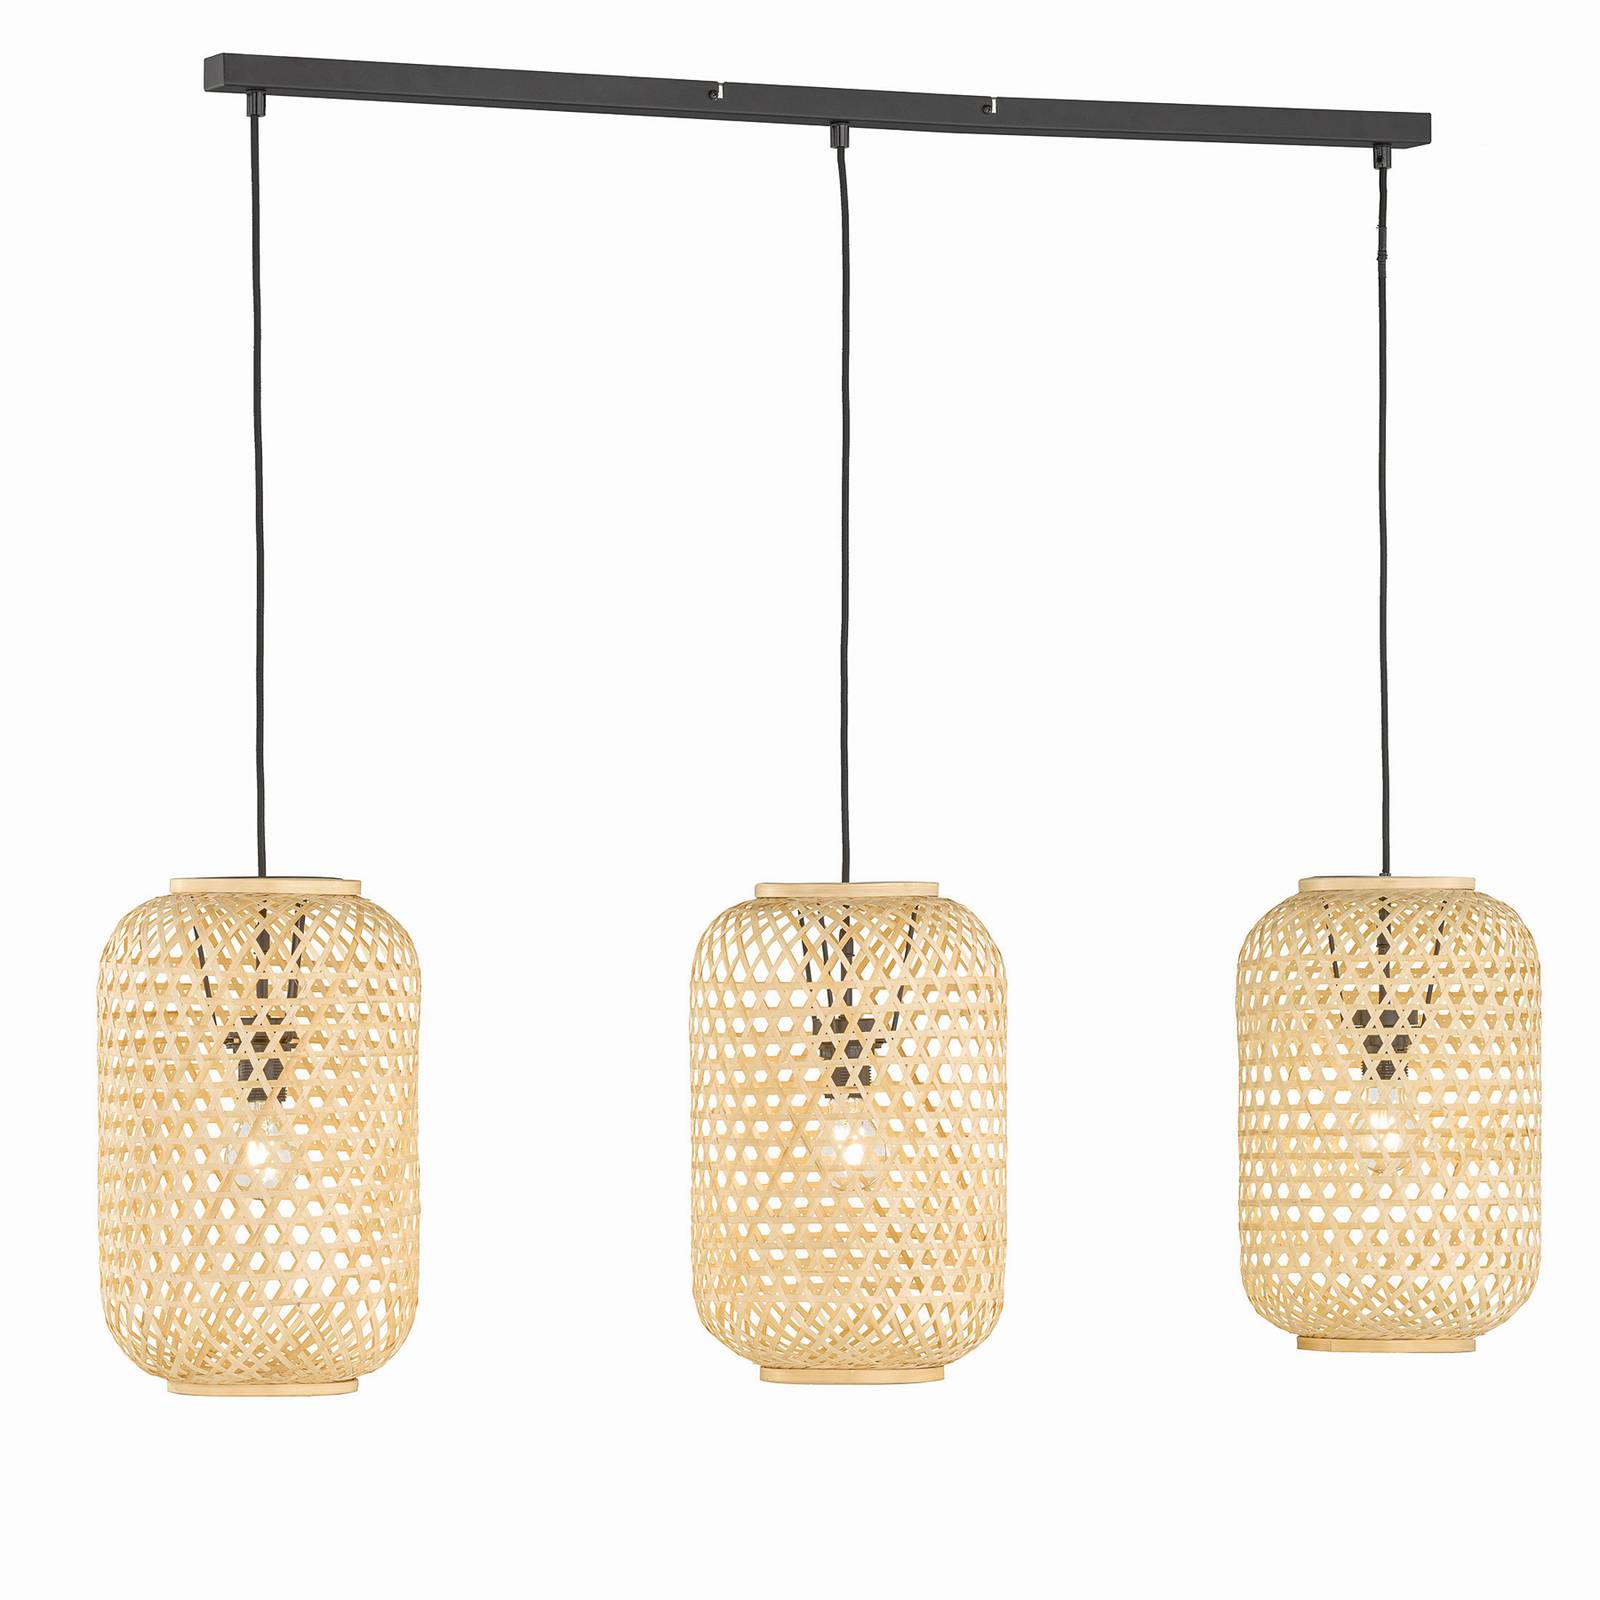 Schöner Wohnen Calla hanglamp 3-lamps natuur